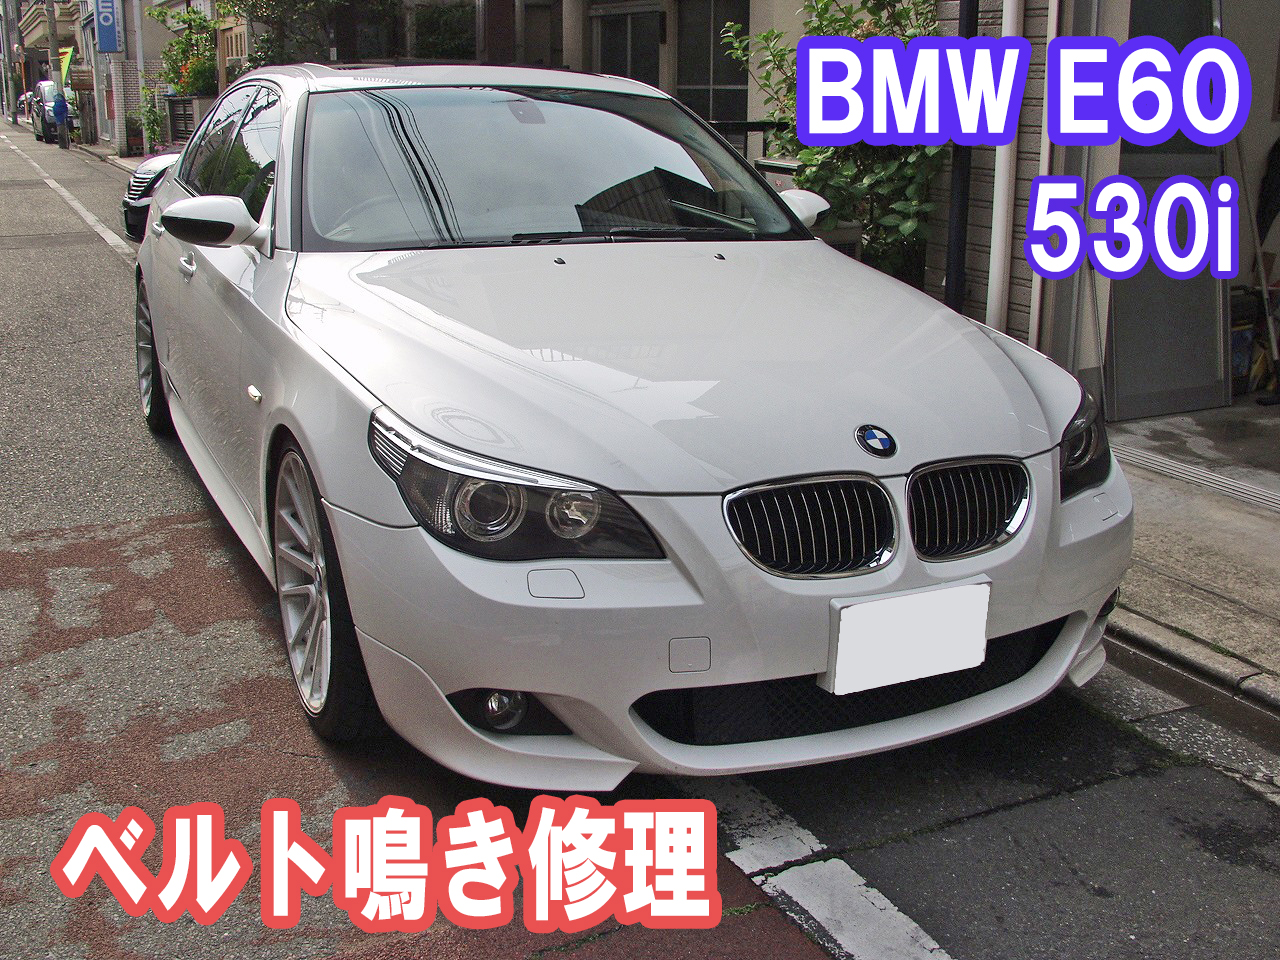 BMW E60 530iのベルト鳴き修理の事例です。